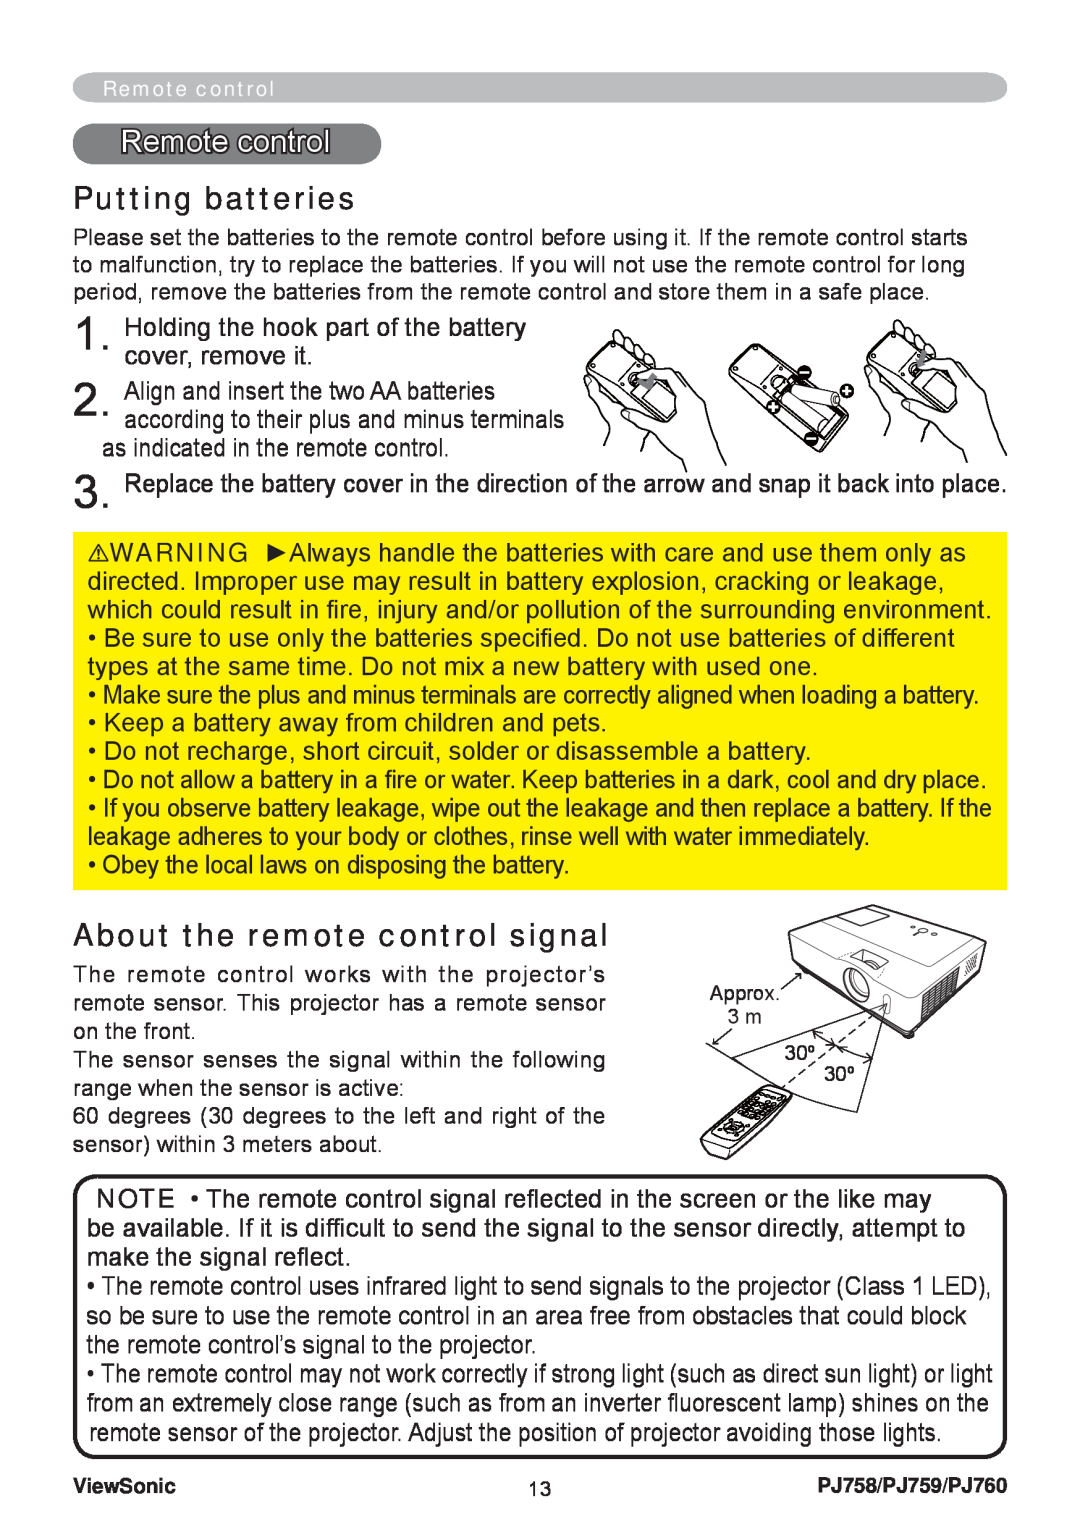 ViewSonic PJ758/PJ759/PJ760 manual Remote control, Putting batteries, About the remote control signal 